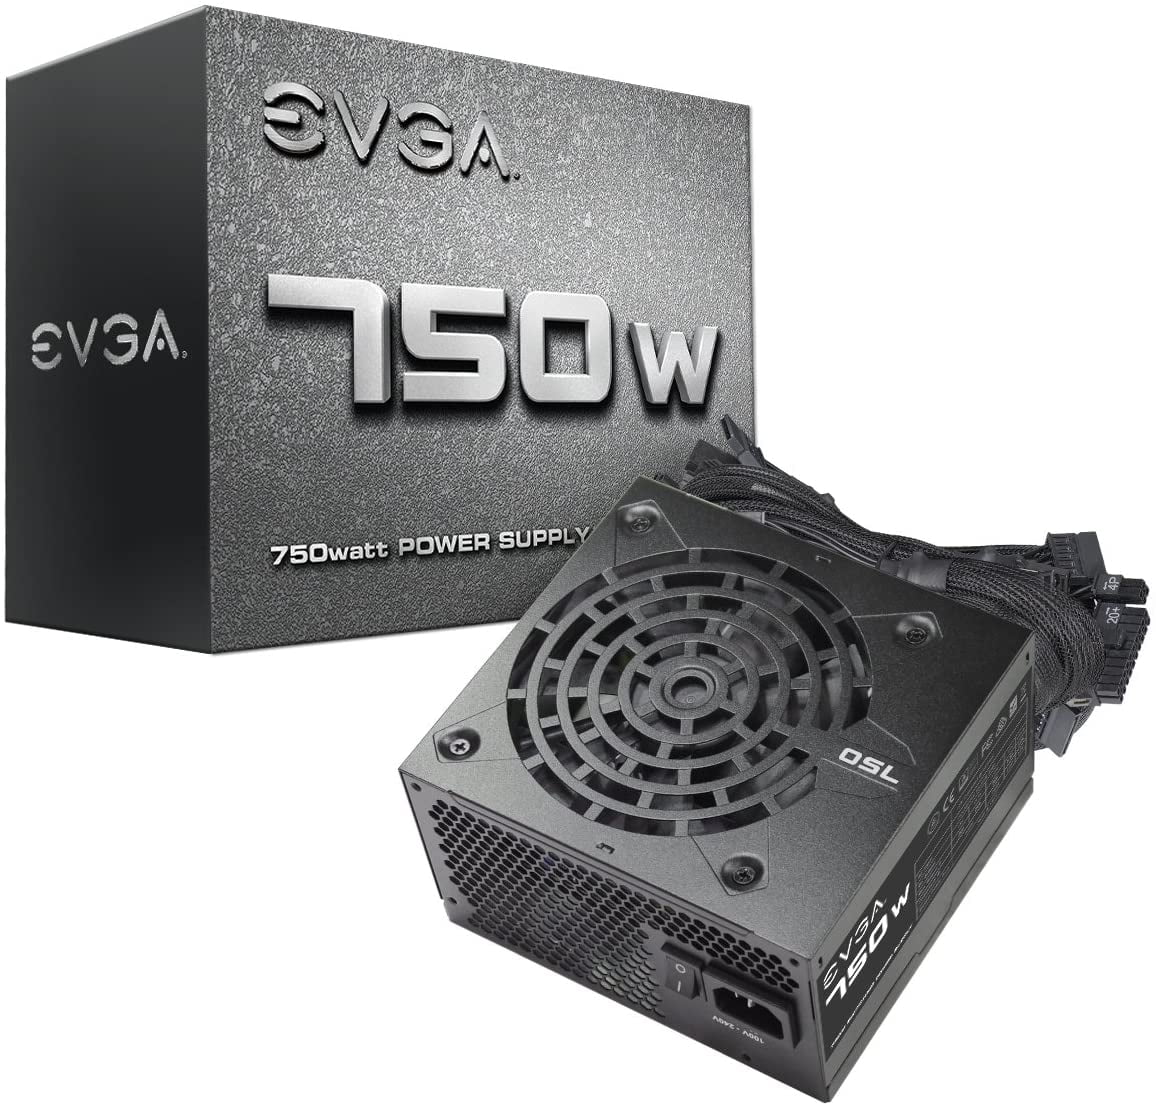 EVGA 750W Single +12V Computer Power Supplies